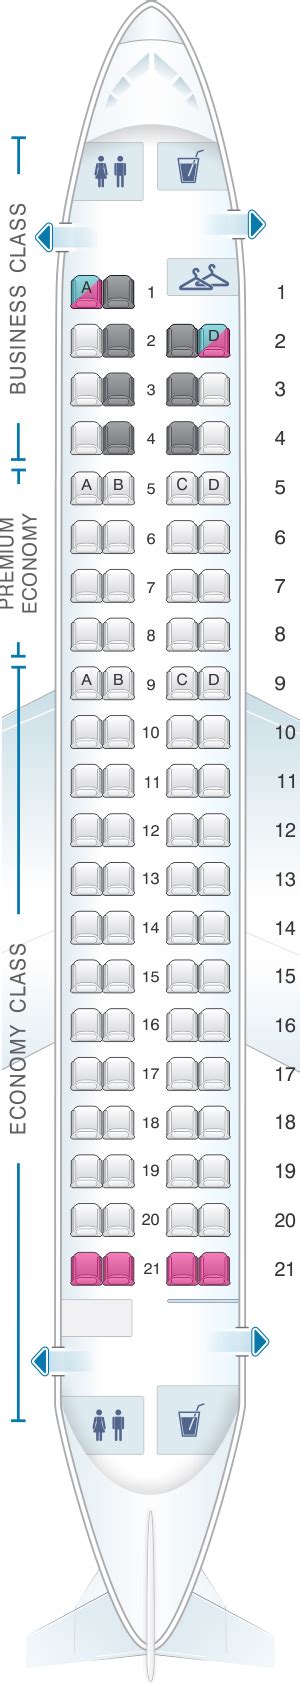 Delta Embraer Seat Map